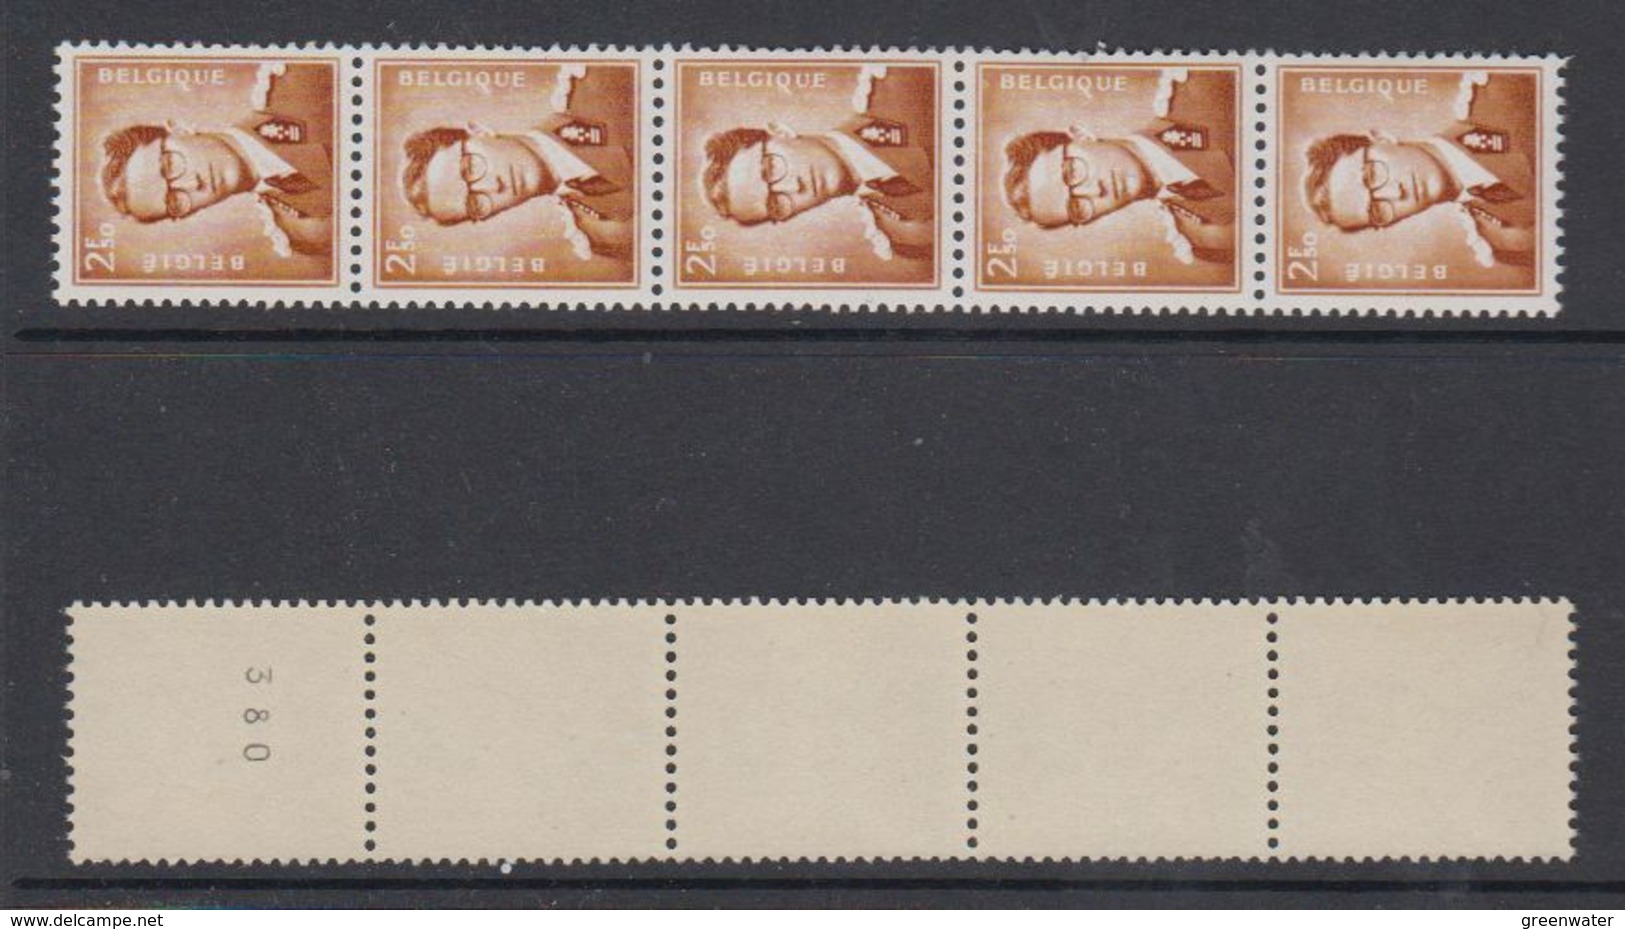 Belgie 1970 Rolzegels / Coil Stamps 2.50fr Strip Van 5 (1 Zegel Nummer Op Achterzijde) ** Mnh (48811A) - Coil Stamps